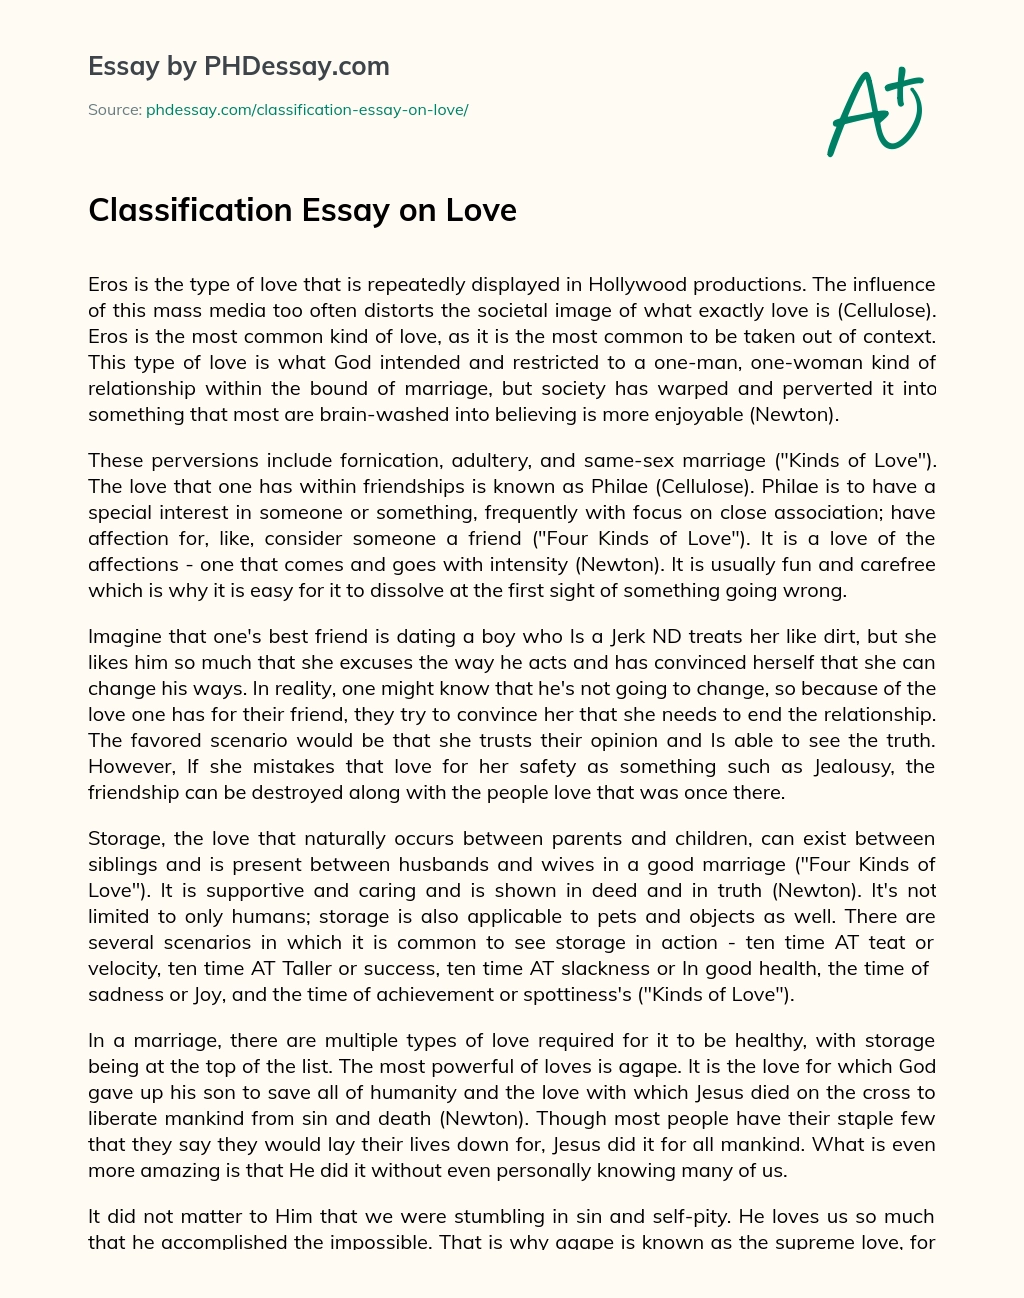 classification essay on love